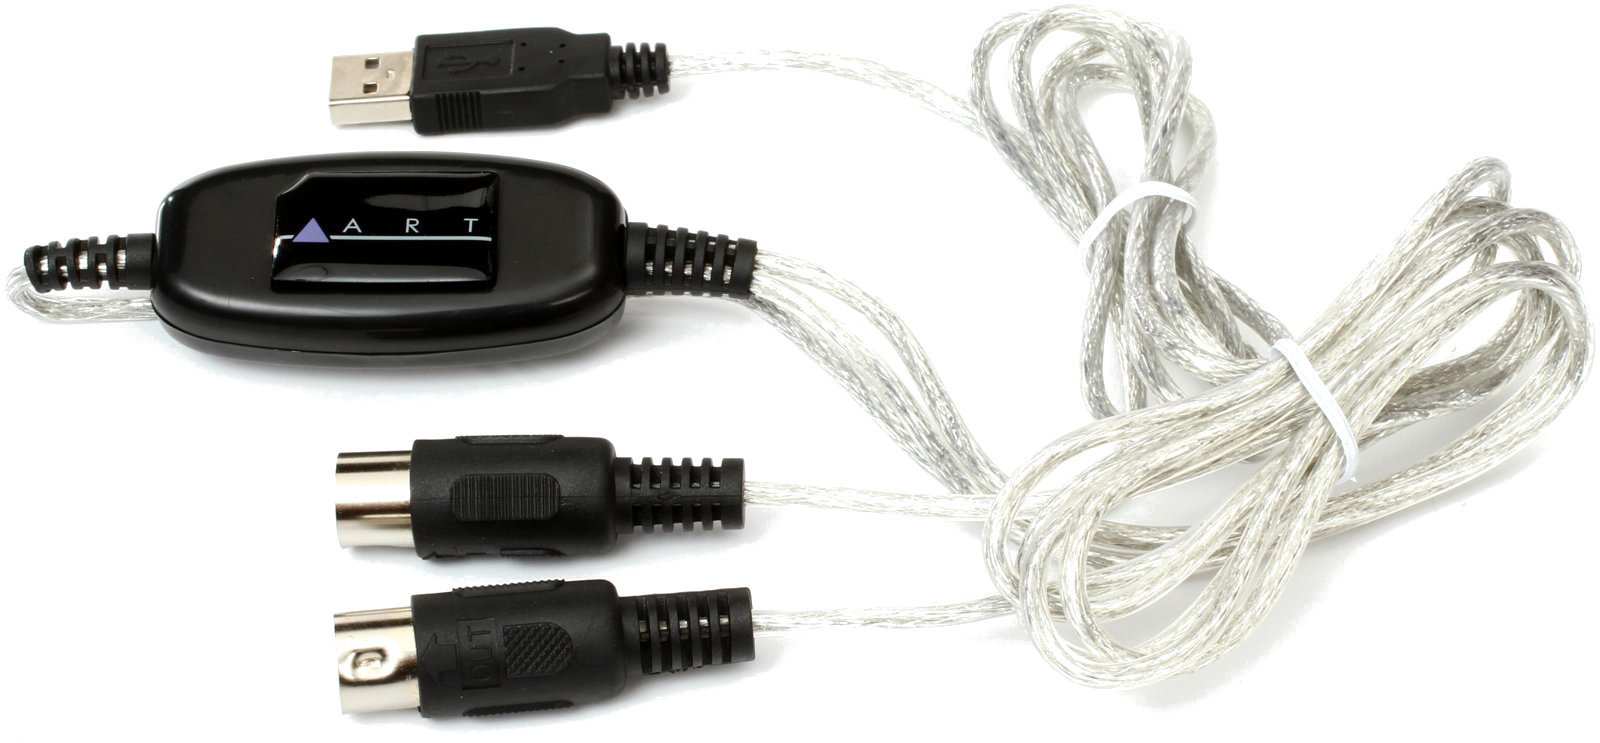 Interfață audio USB ART Mconnect USB-To-MIDI Cable